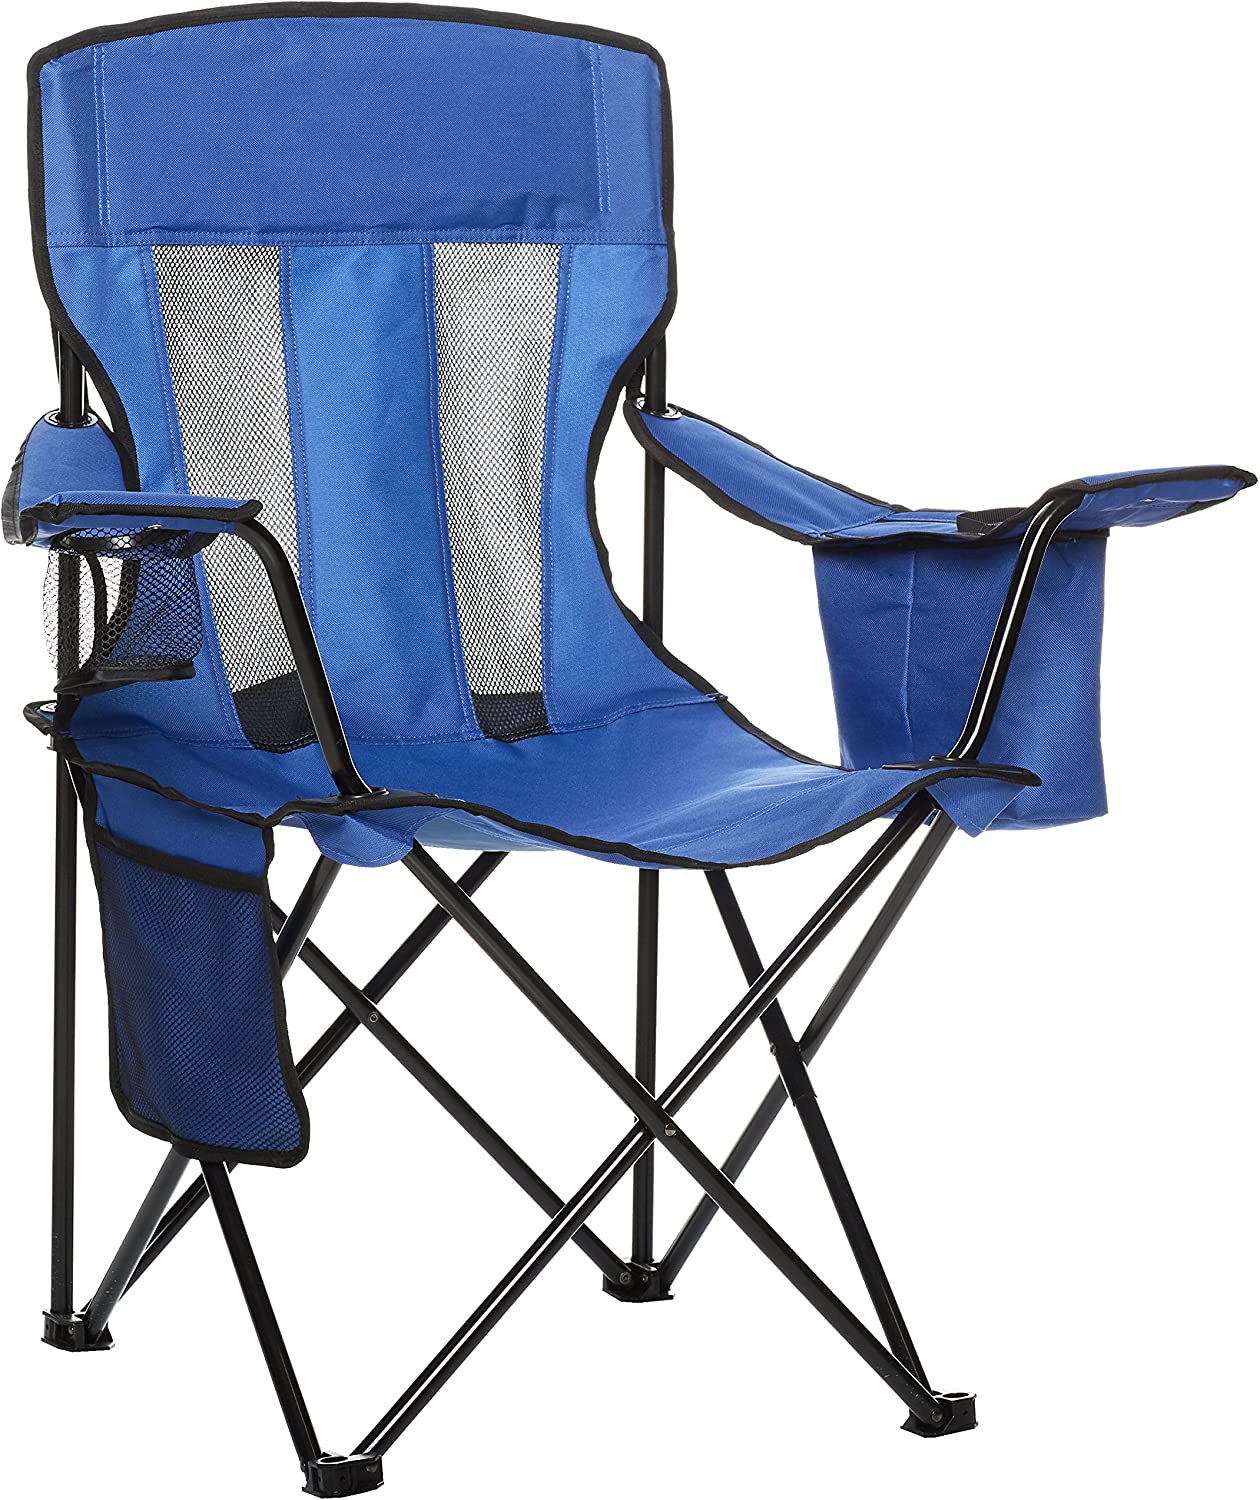 Photo 1 of Amazon Basics Portable Camping Chair